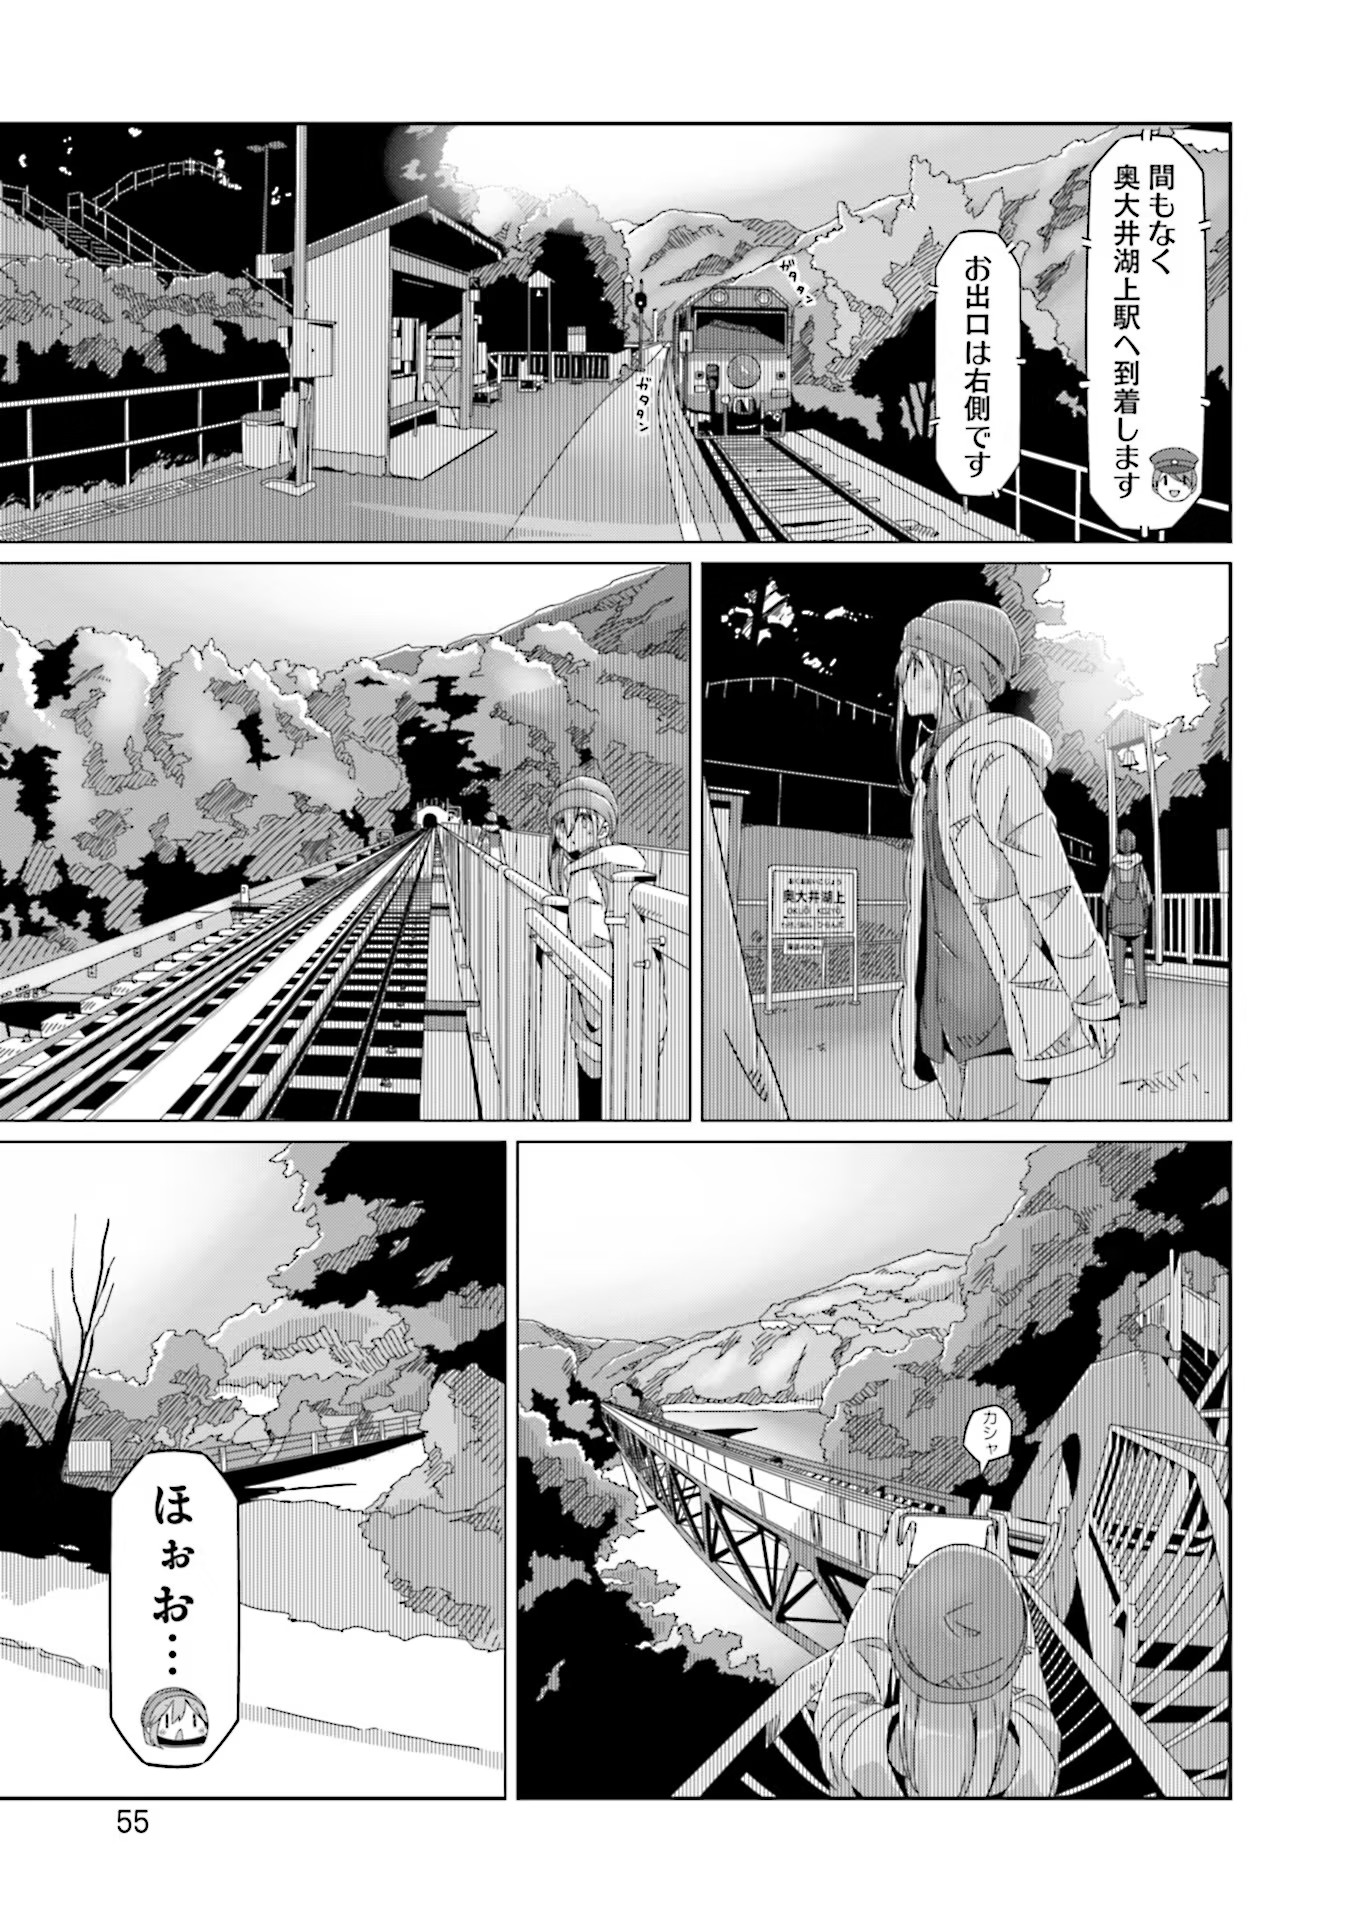 Yuru Camp - Chapter 60 - Page 1